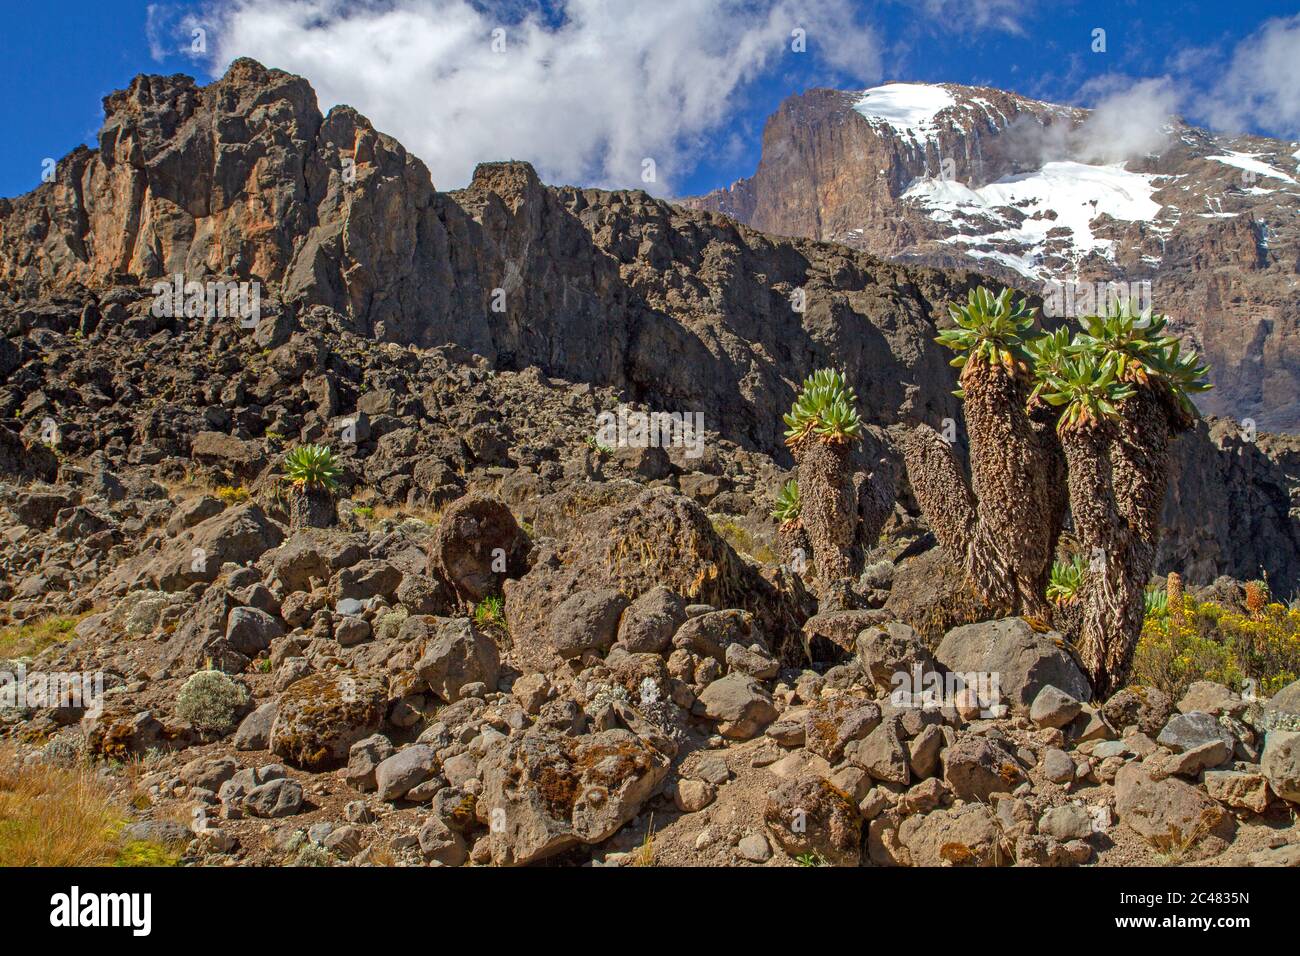 Giant groundsels growing below the summit of Mt Kilimanjaro Stock Photo